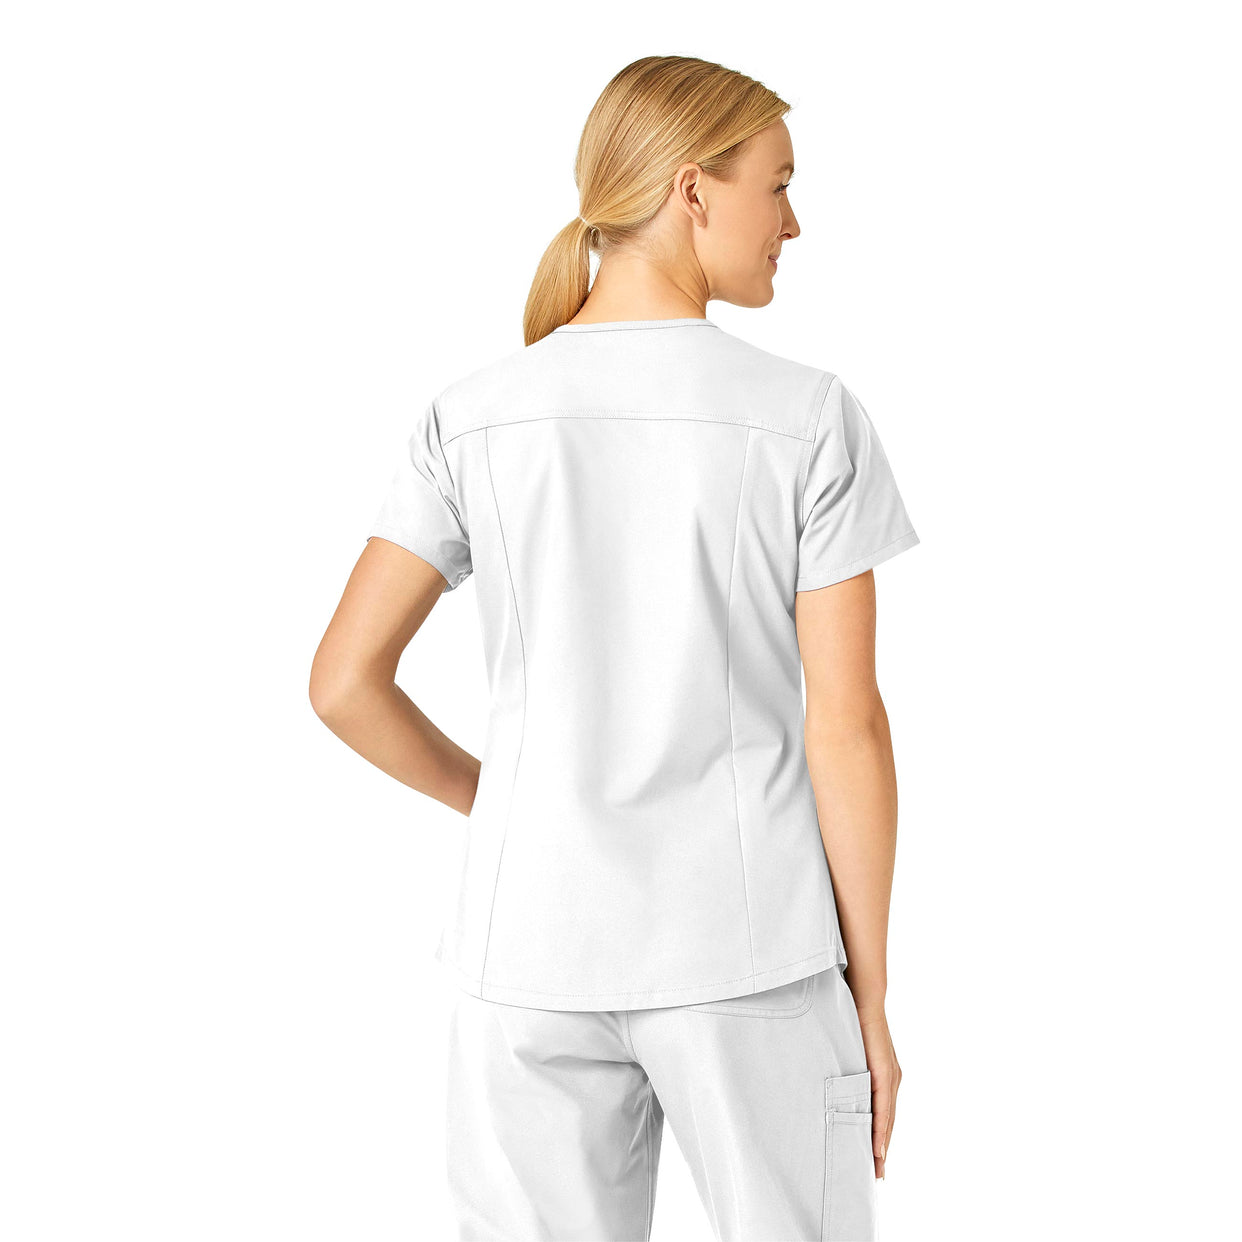 Force Essentials Women's V-Neck Scrub Top White back view